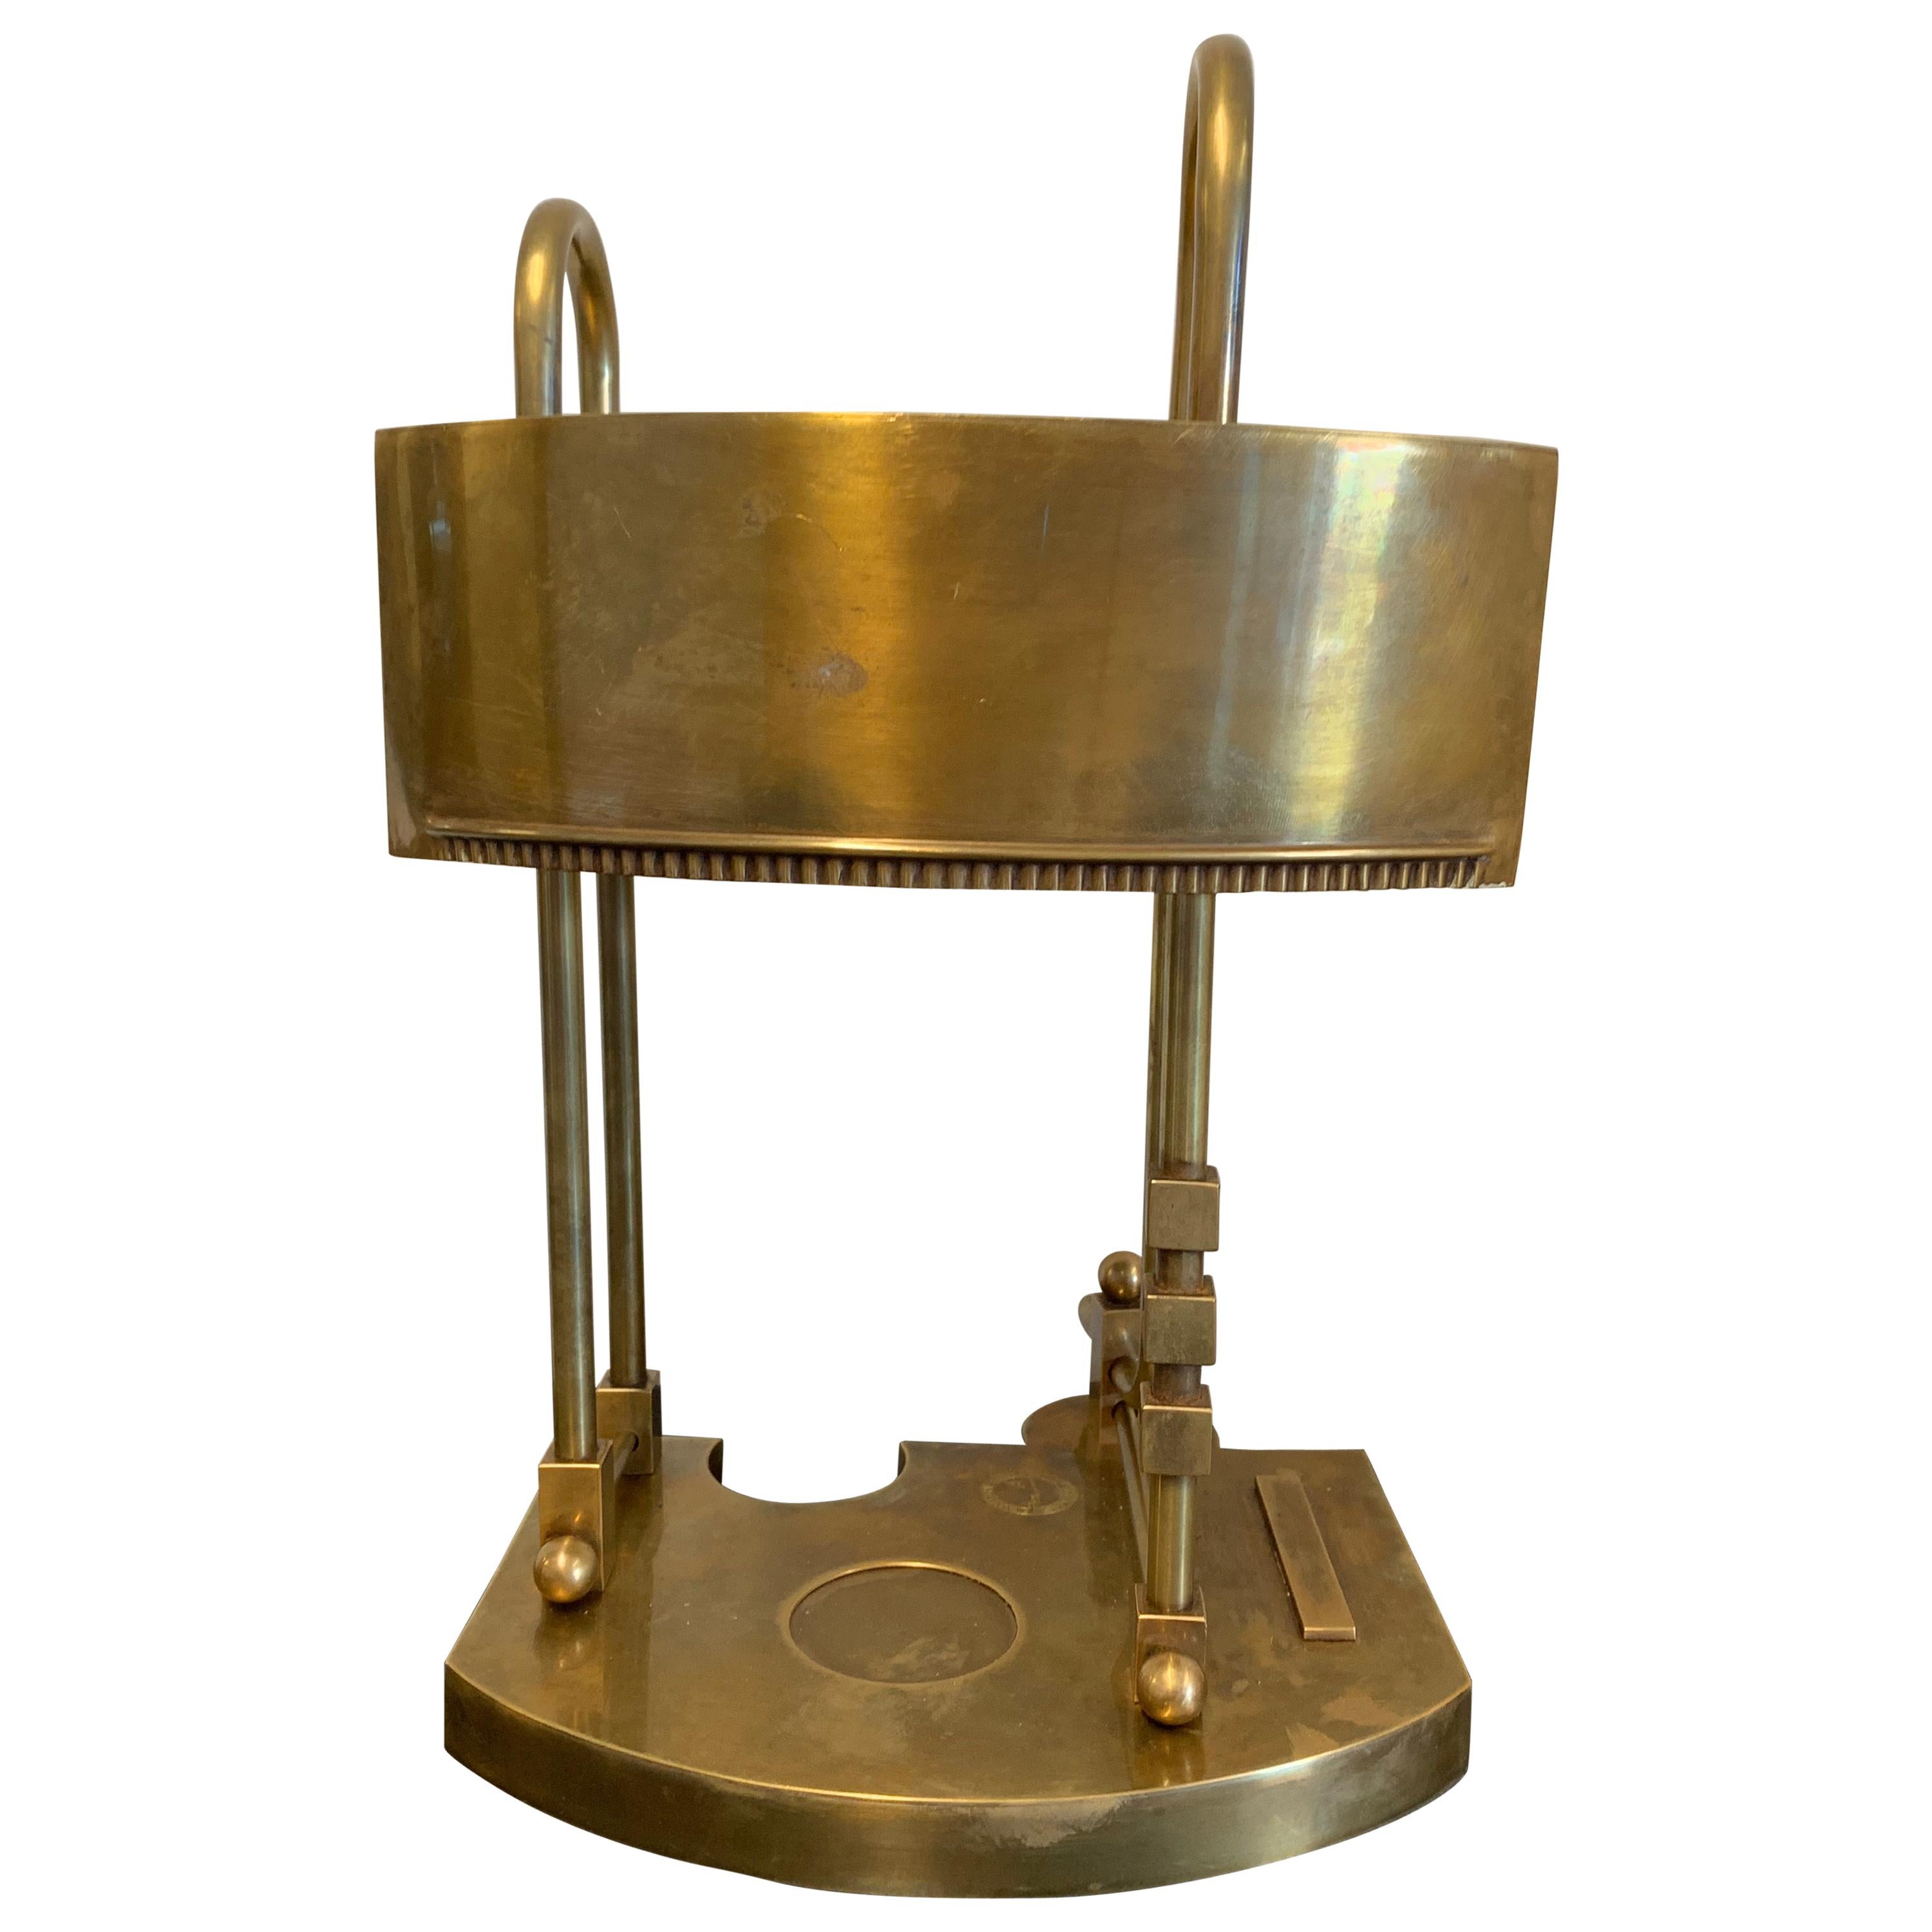 Bauhaus Table Lamp, Made in Germany, circa 1925